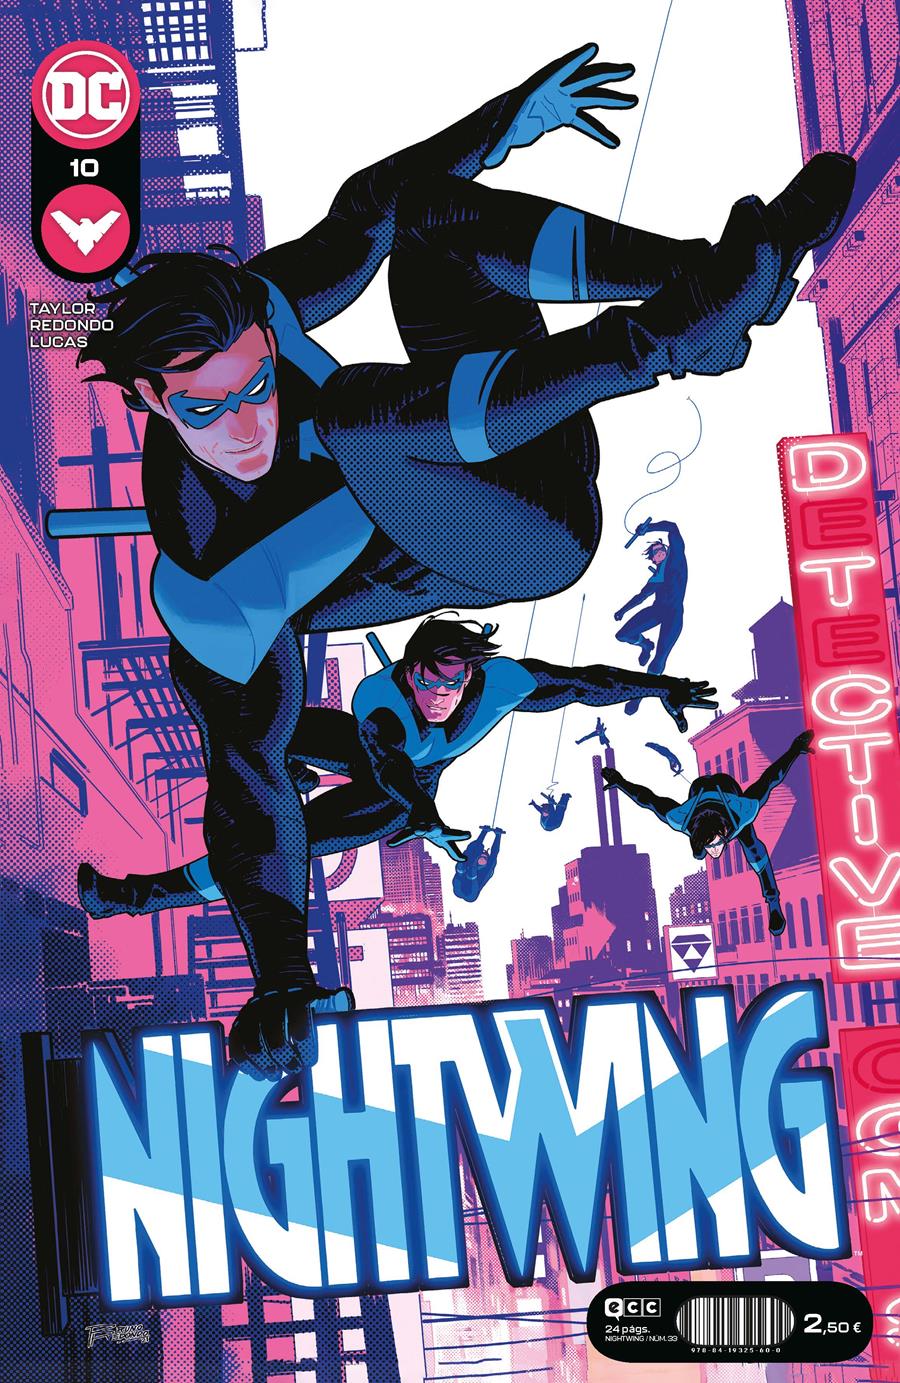 Nightwing núm. 10 | N0722-ECC21 | Bruno Redondo / Tom Taylor | Terra de Còmic - Tu tienda de cómics online especializada en cómics, manga y merchandising